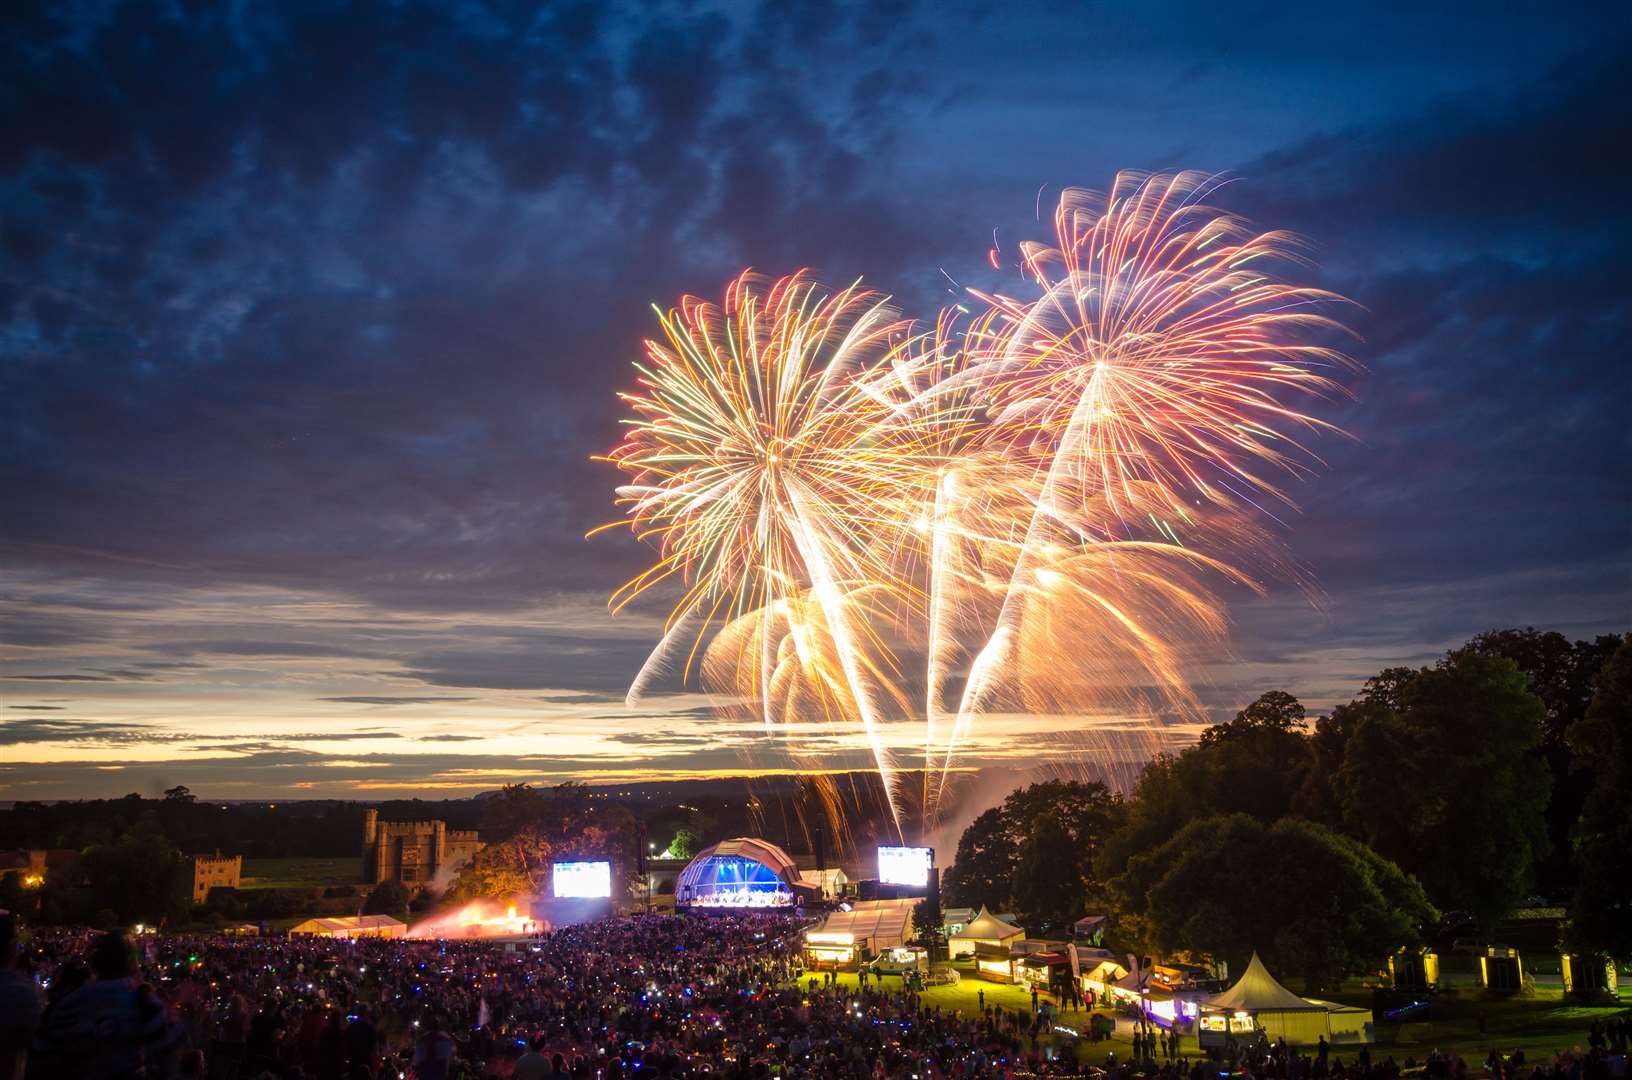 The Leeds Castle Concert includes a fireworks finale